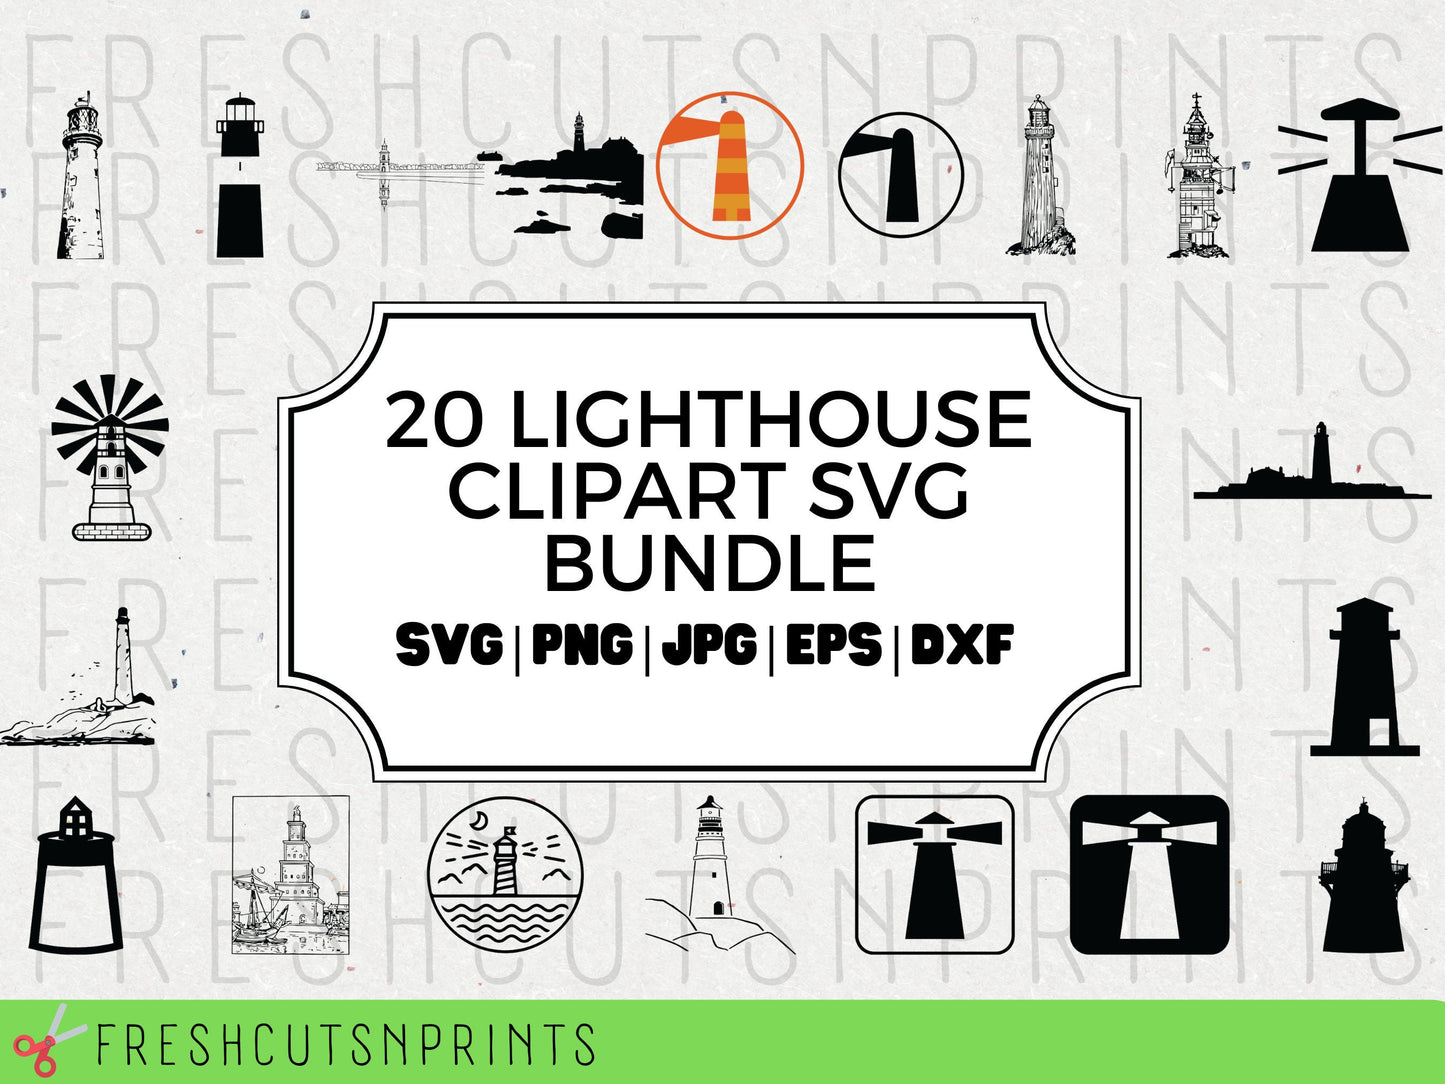 20 Lighthouse SVG Clipart Bundle , Lighthouse Cut Files, Lighthouse Clipart, Lighthouse Silhouette, Lighthouse Vector, Commercial Use